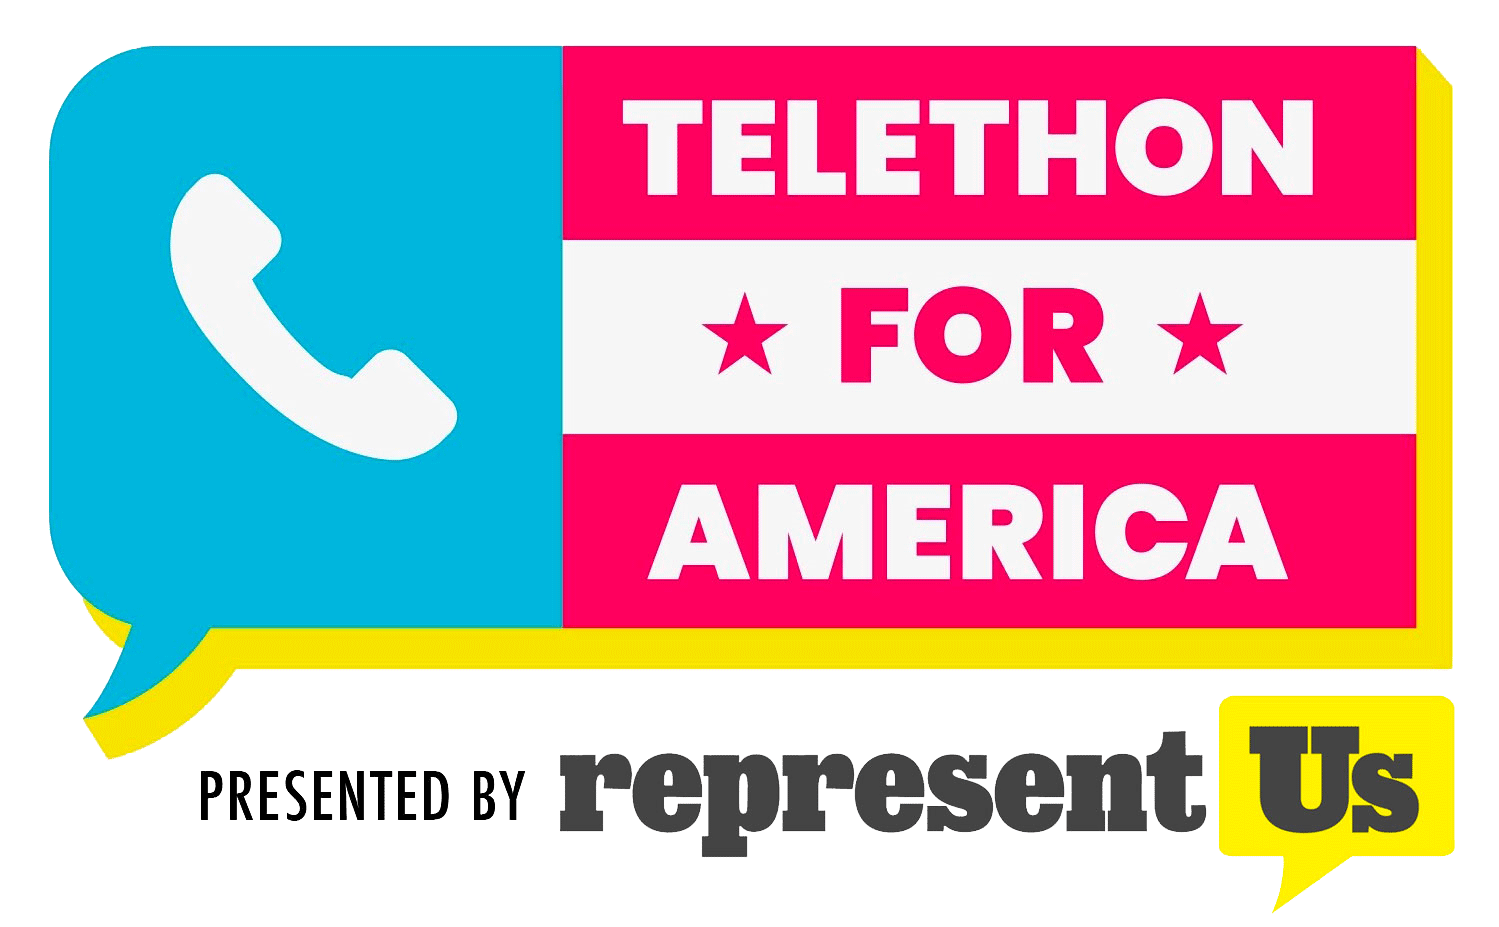 The Telethon for America